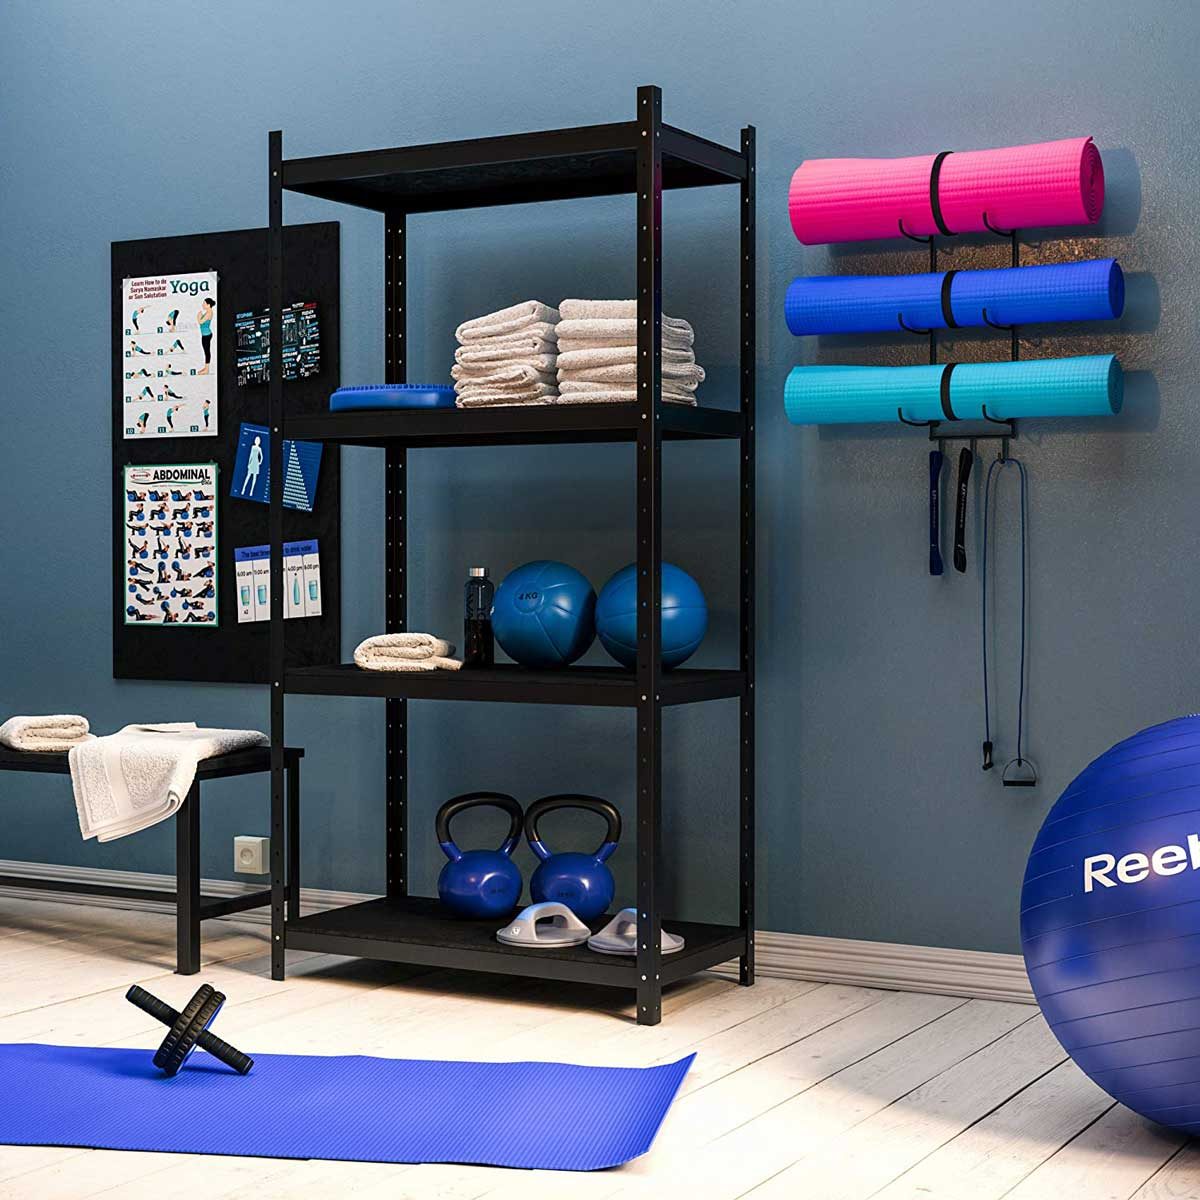 4 Wall Mount Yoga Mat Foam Roller & Towel Rack Holder for Fitness Class Home Gym 